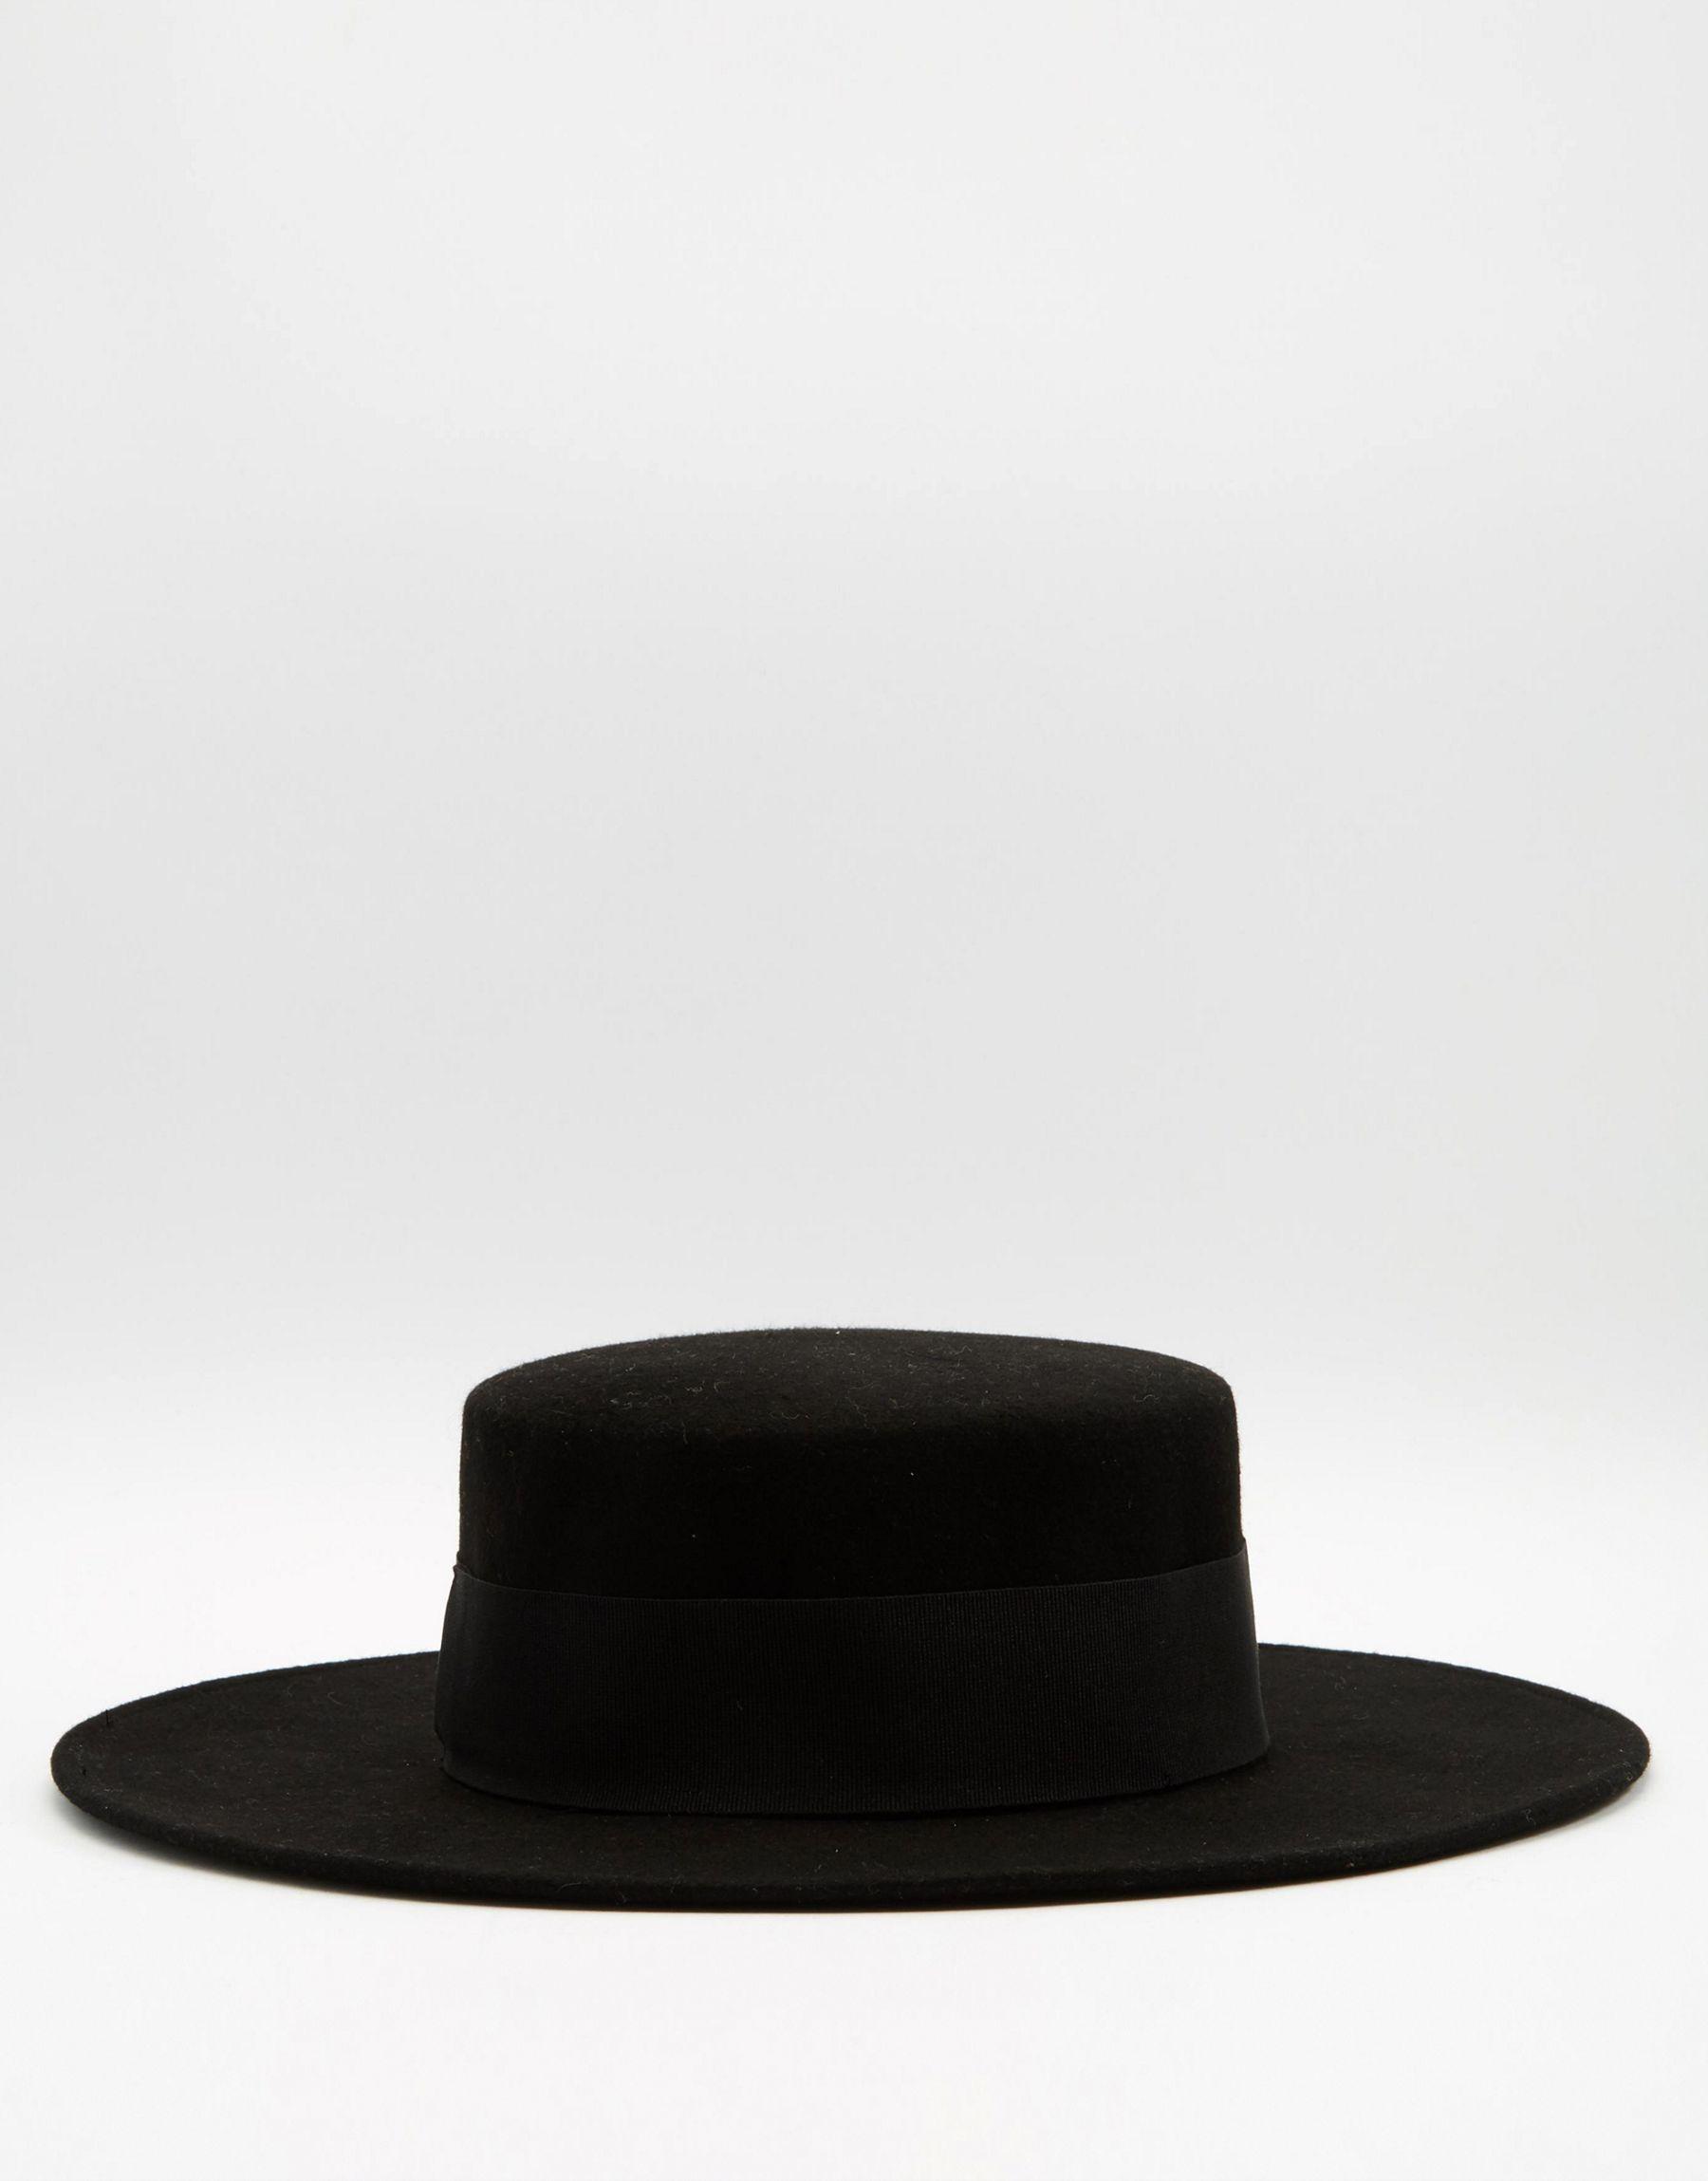 Catarzi Wool Flat Top Wide Brim Hat in Black for Men - Lyst